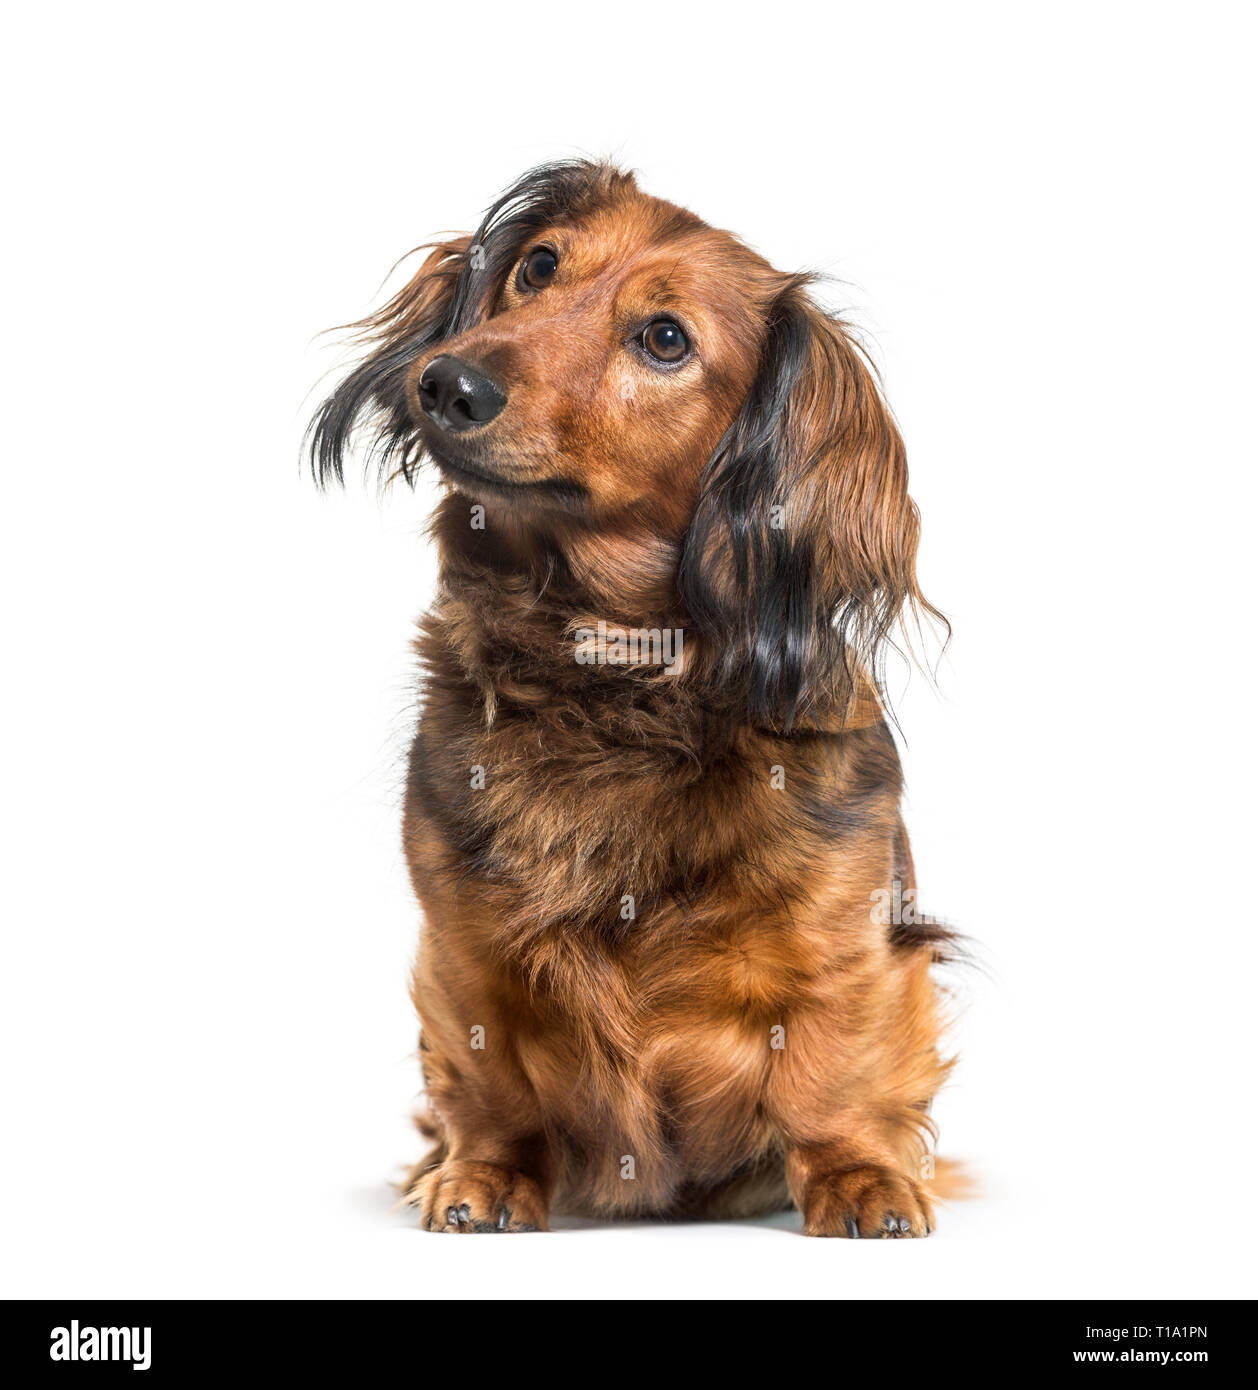 Dachshund, sausage dog, wiener dog sitting in front of white background Stock Photo